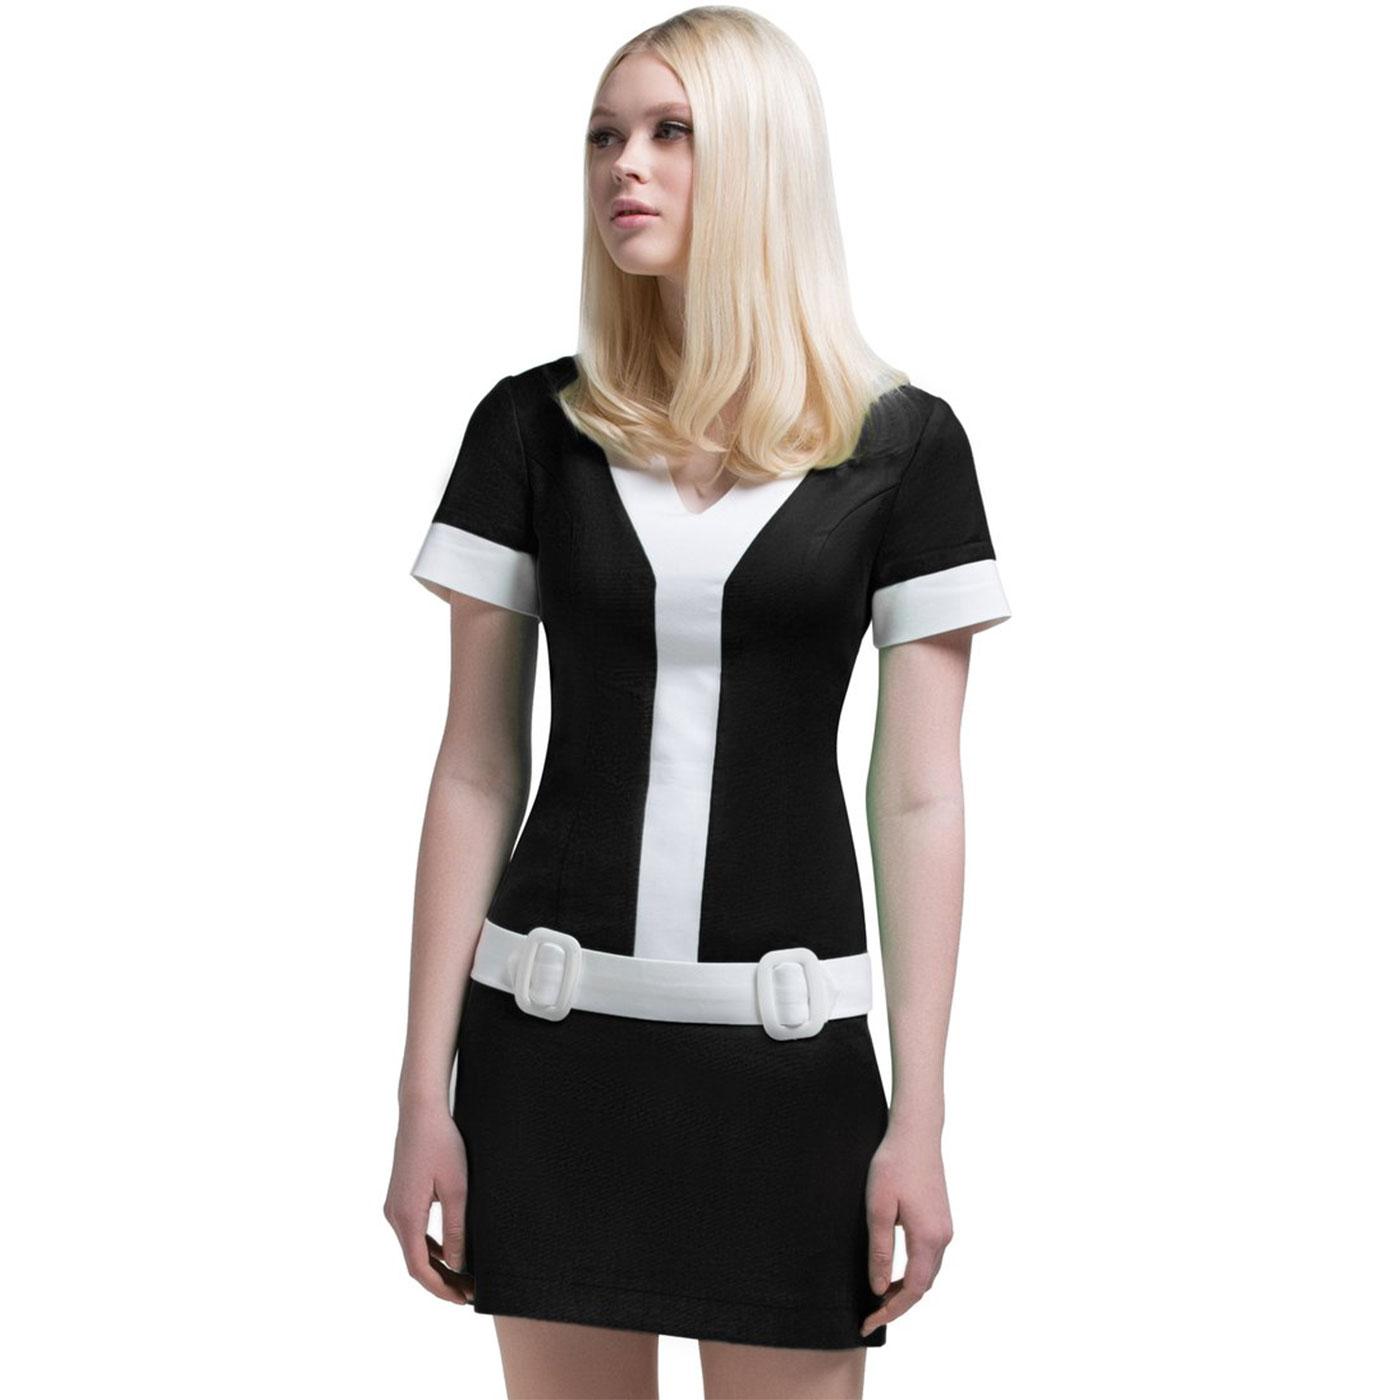 MARMALADE Retro 60s Short Sleeve Mod Dress Black